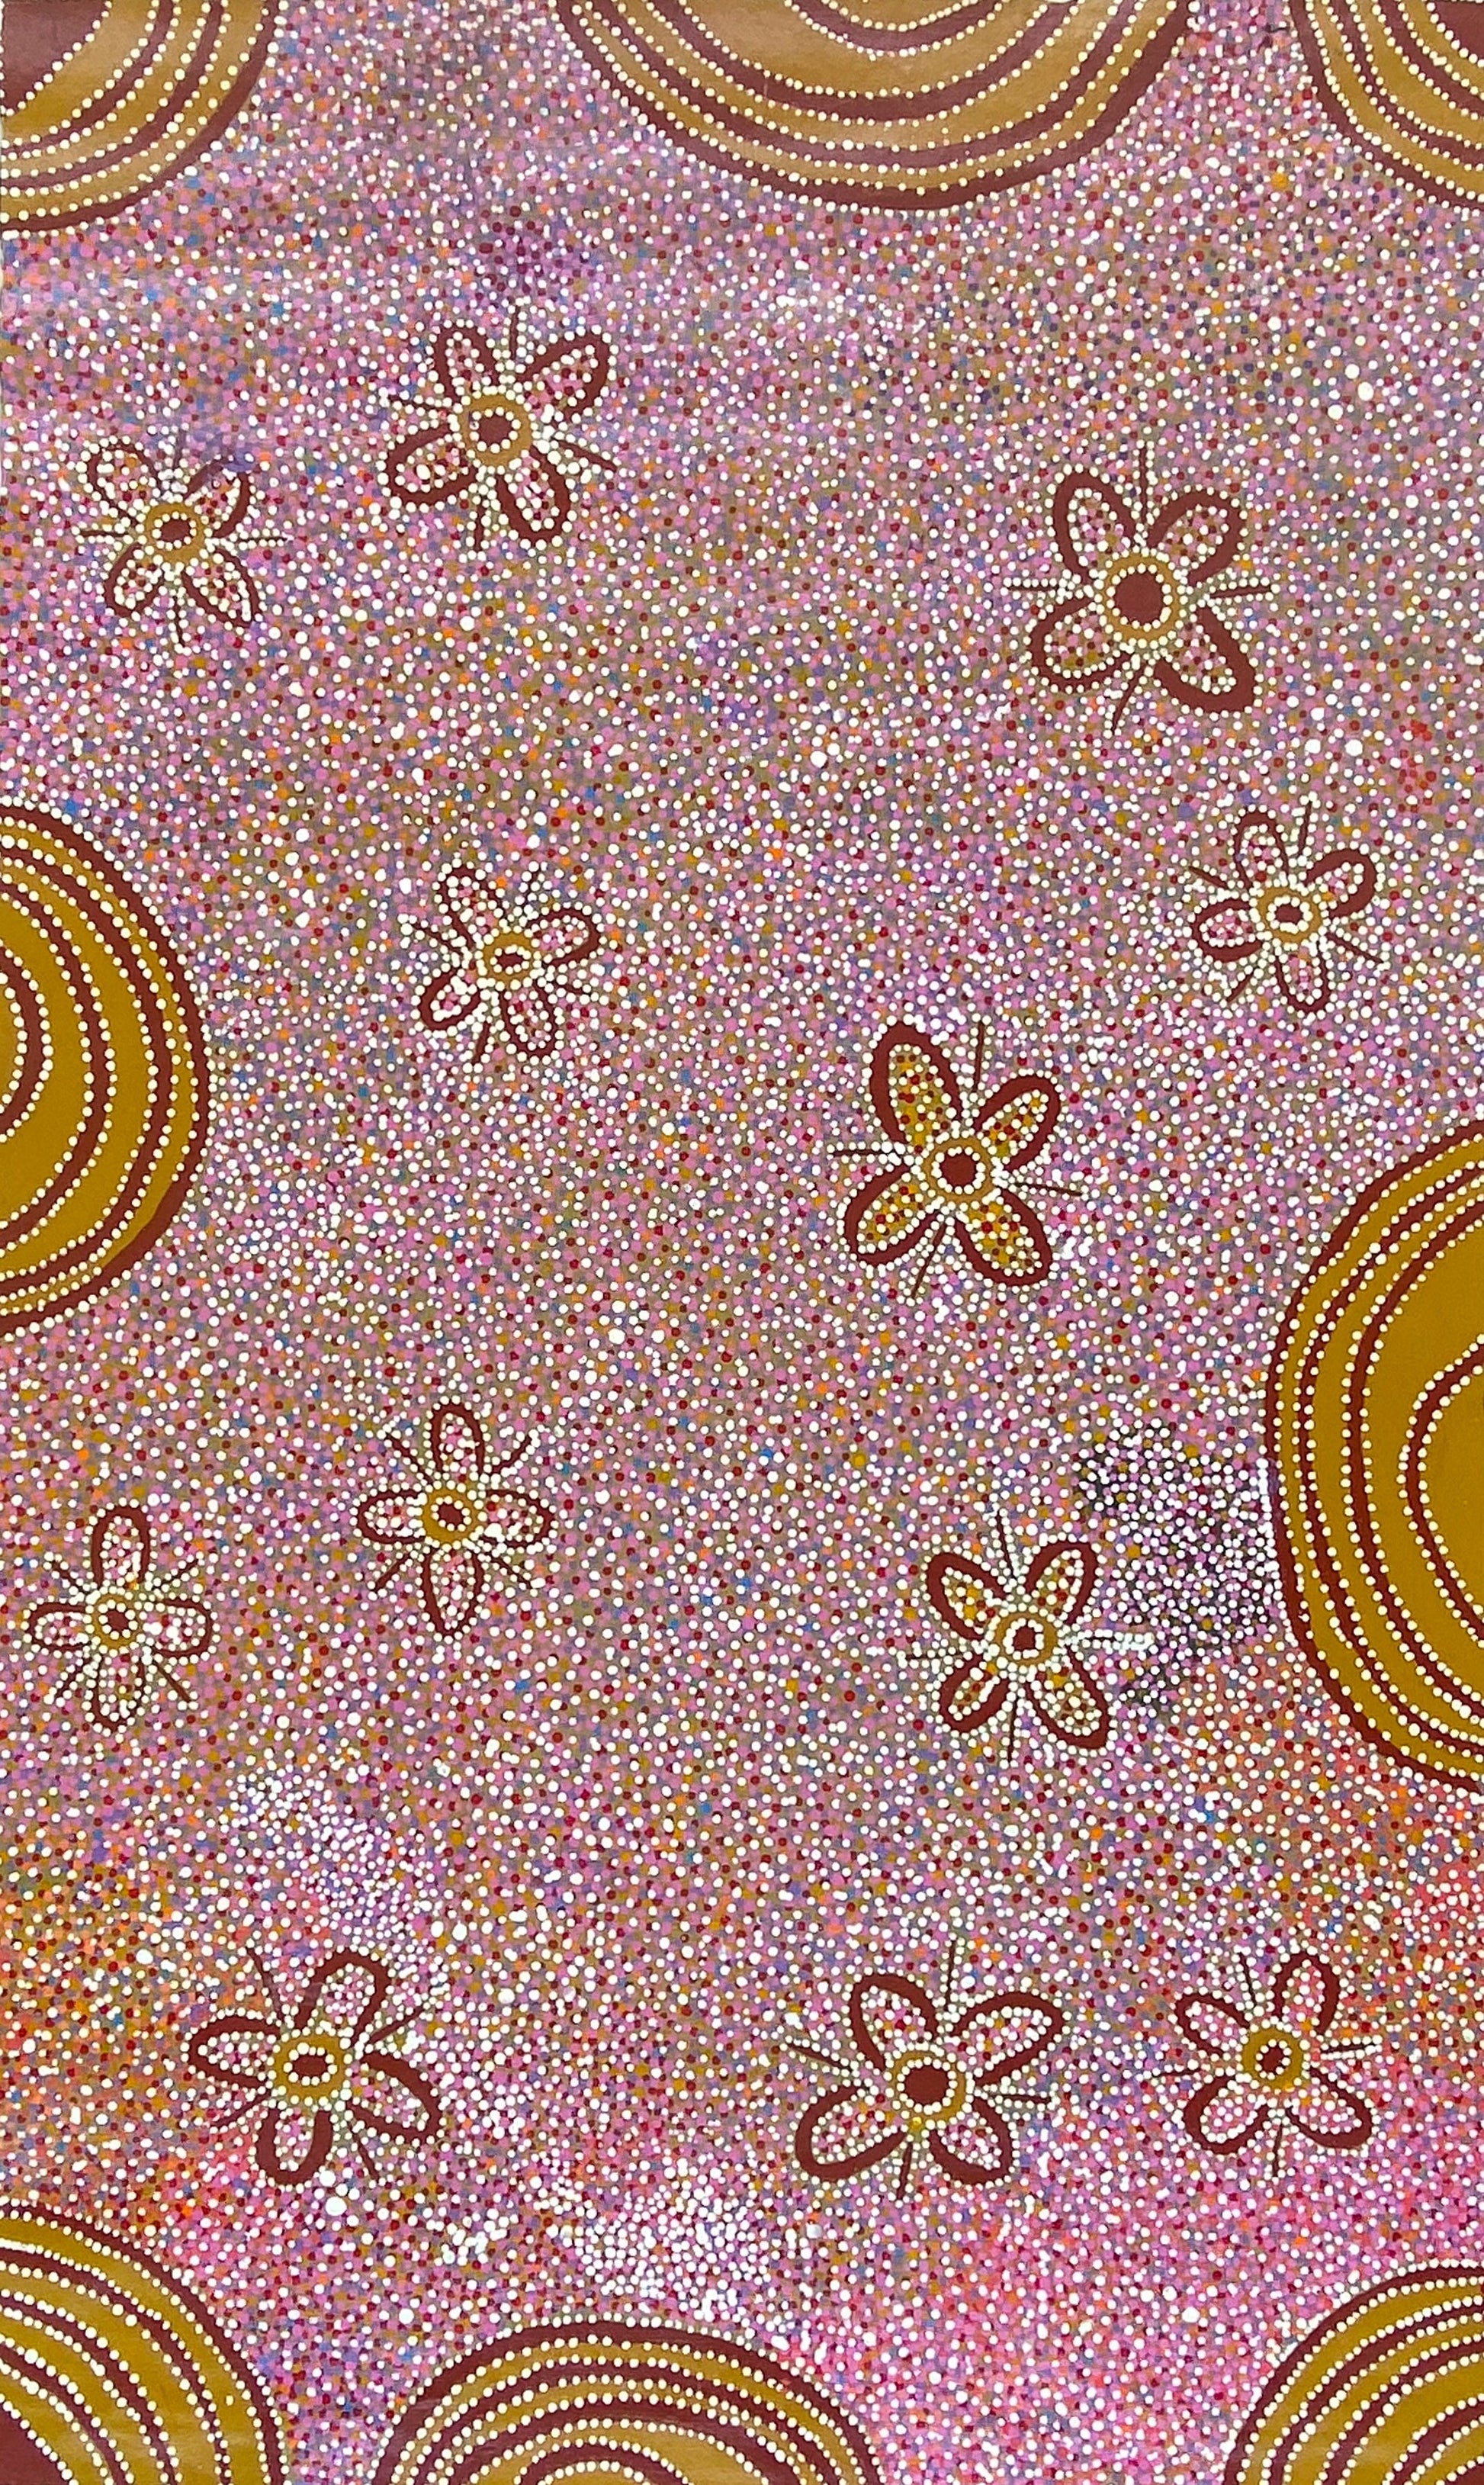 Bessie Pitjara - Women's Ceremony - Dot Art Painting - Iconography - Symbolism Art - Utopia - Indigenous Art - Aboriginal Art - Australian Art - Darwin Based Gallery